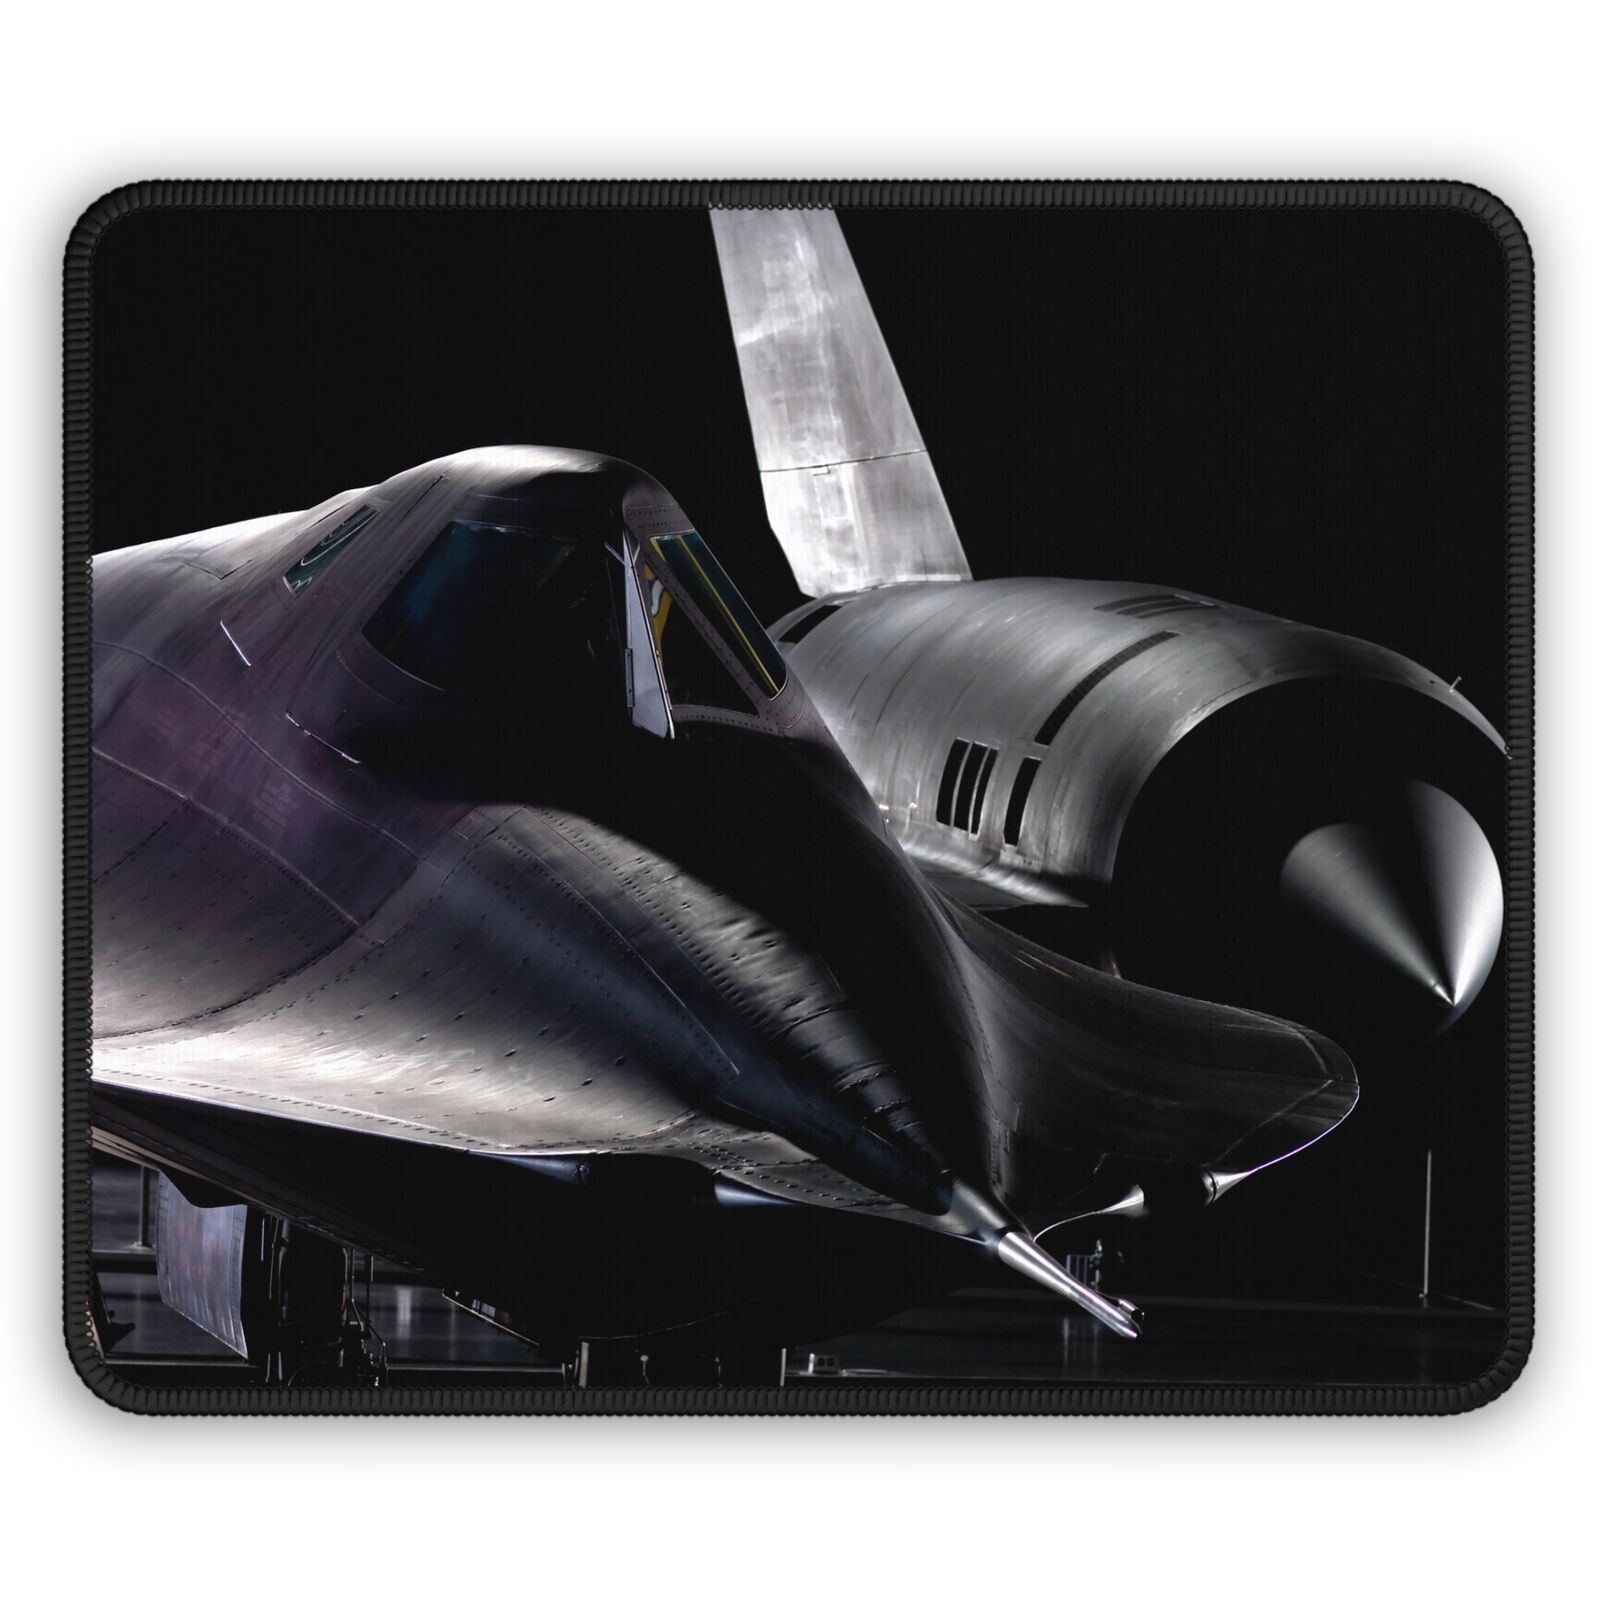 Lockheed SR-71 Blackbird - Aviation Airplane - High Quality Mouse Pad 9x7\